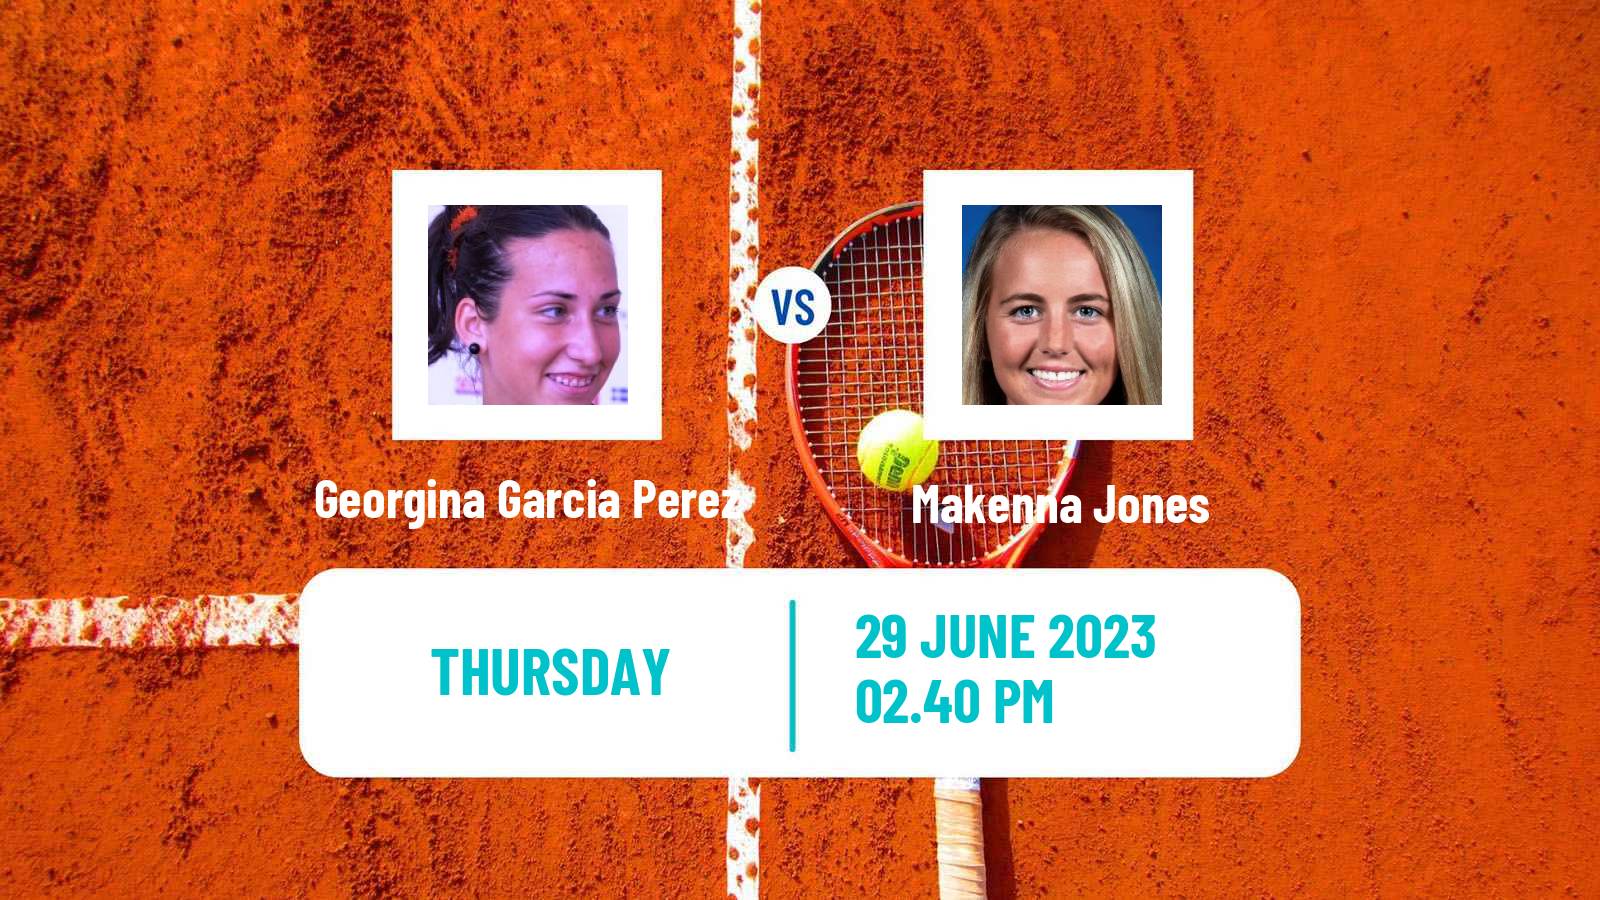 Tennis ITF W40 Palma Del Rio Women Georgina Garcia Perez - Makenna Jones